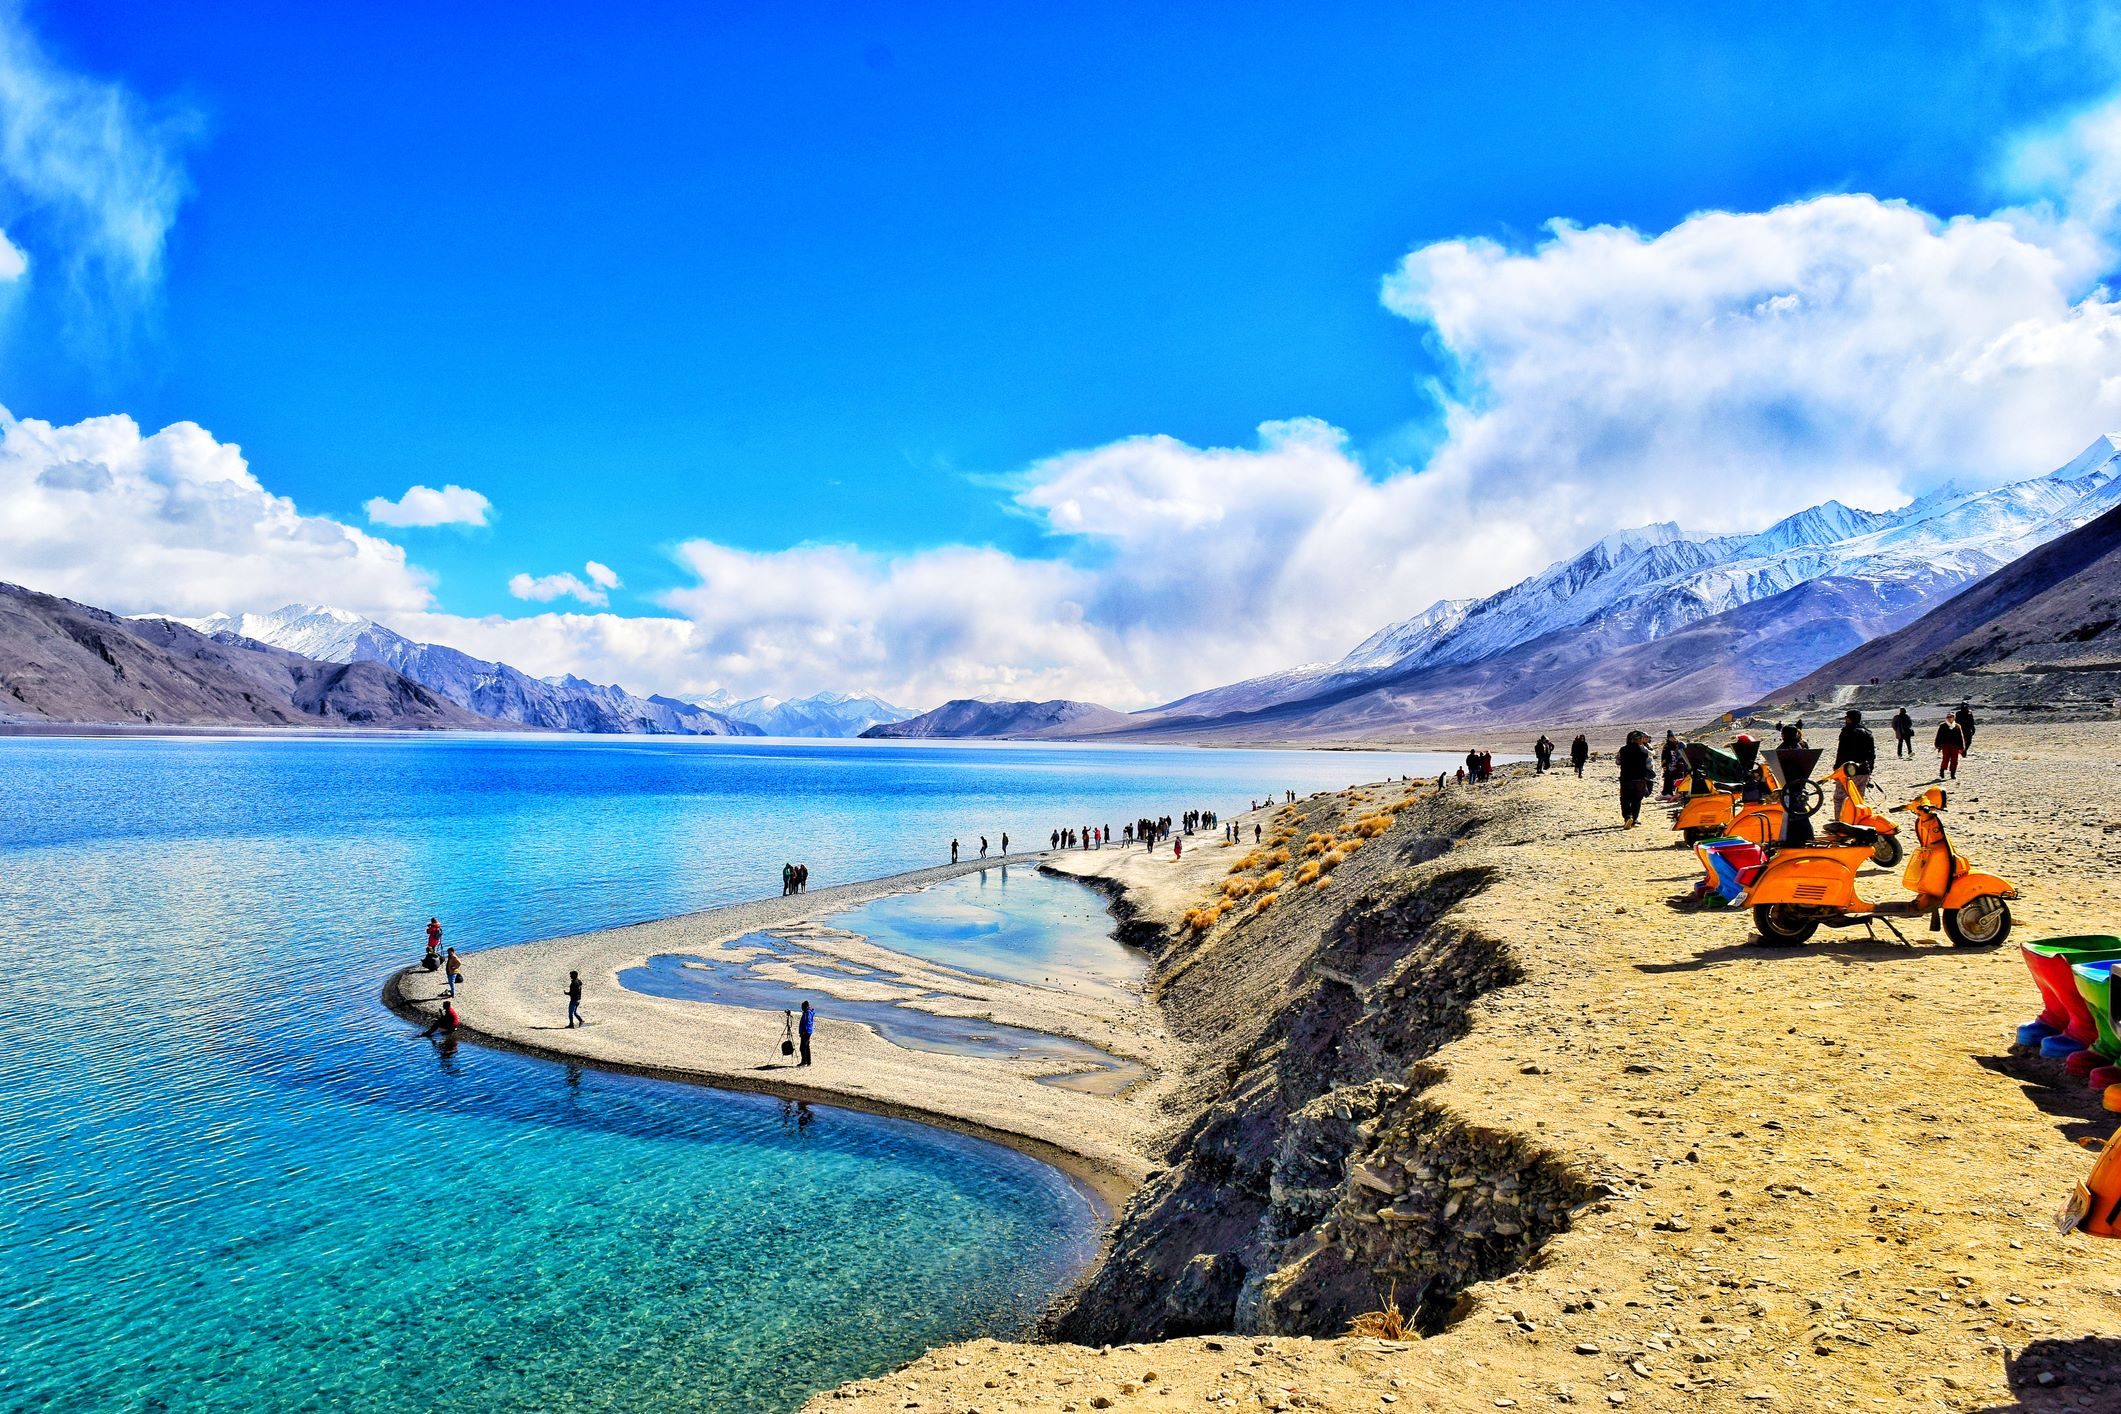 Best Time to Visit Leh Ladakh According to the Season